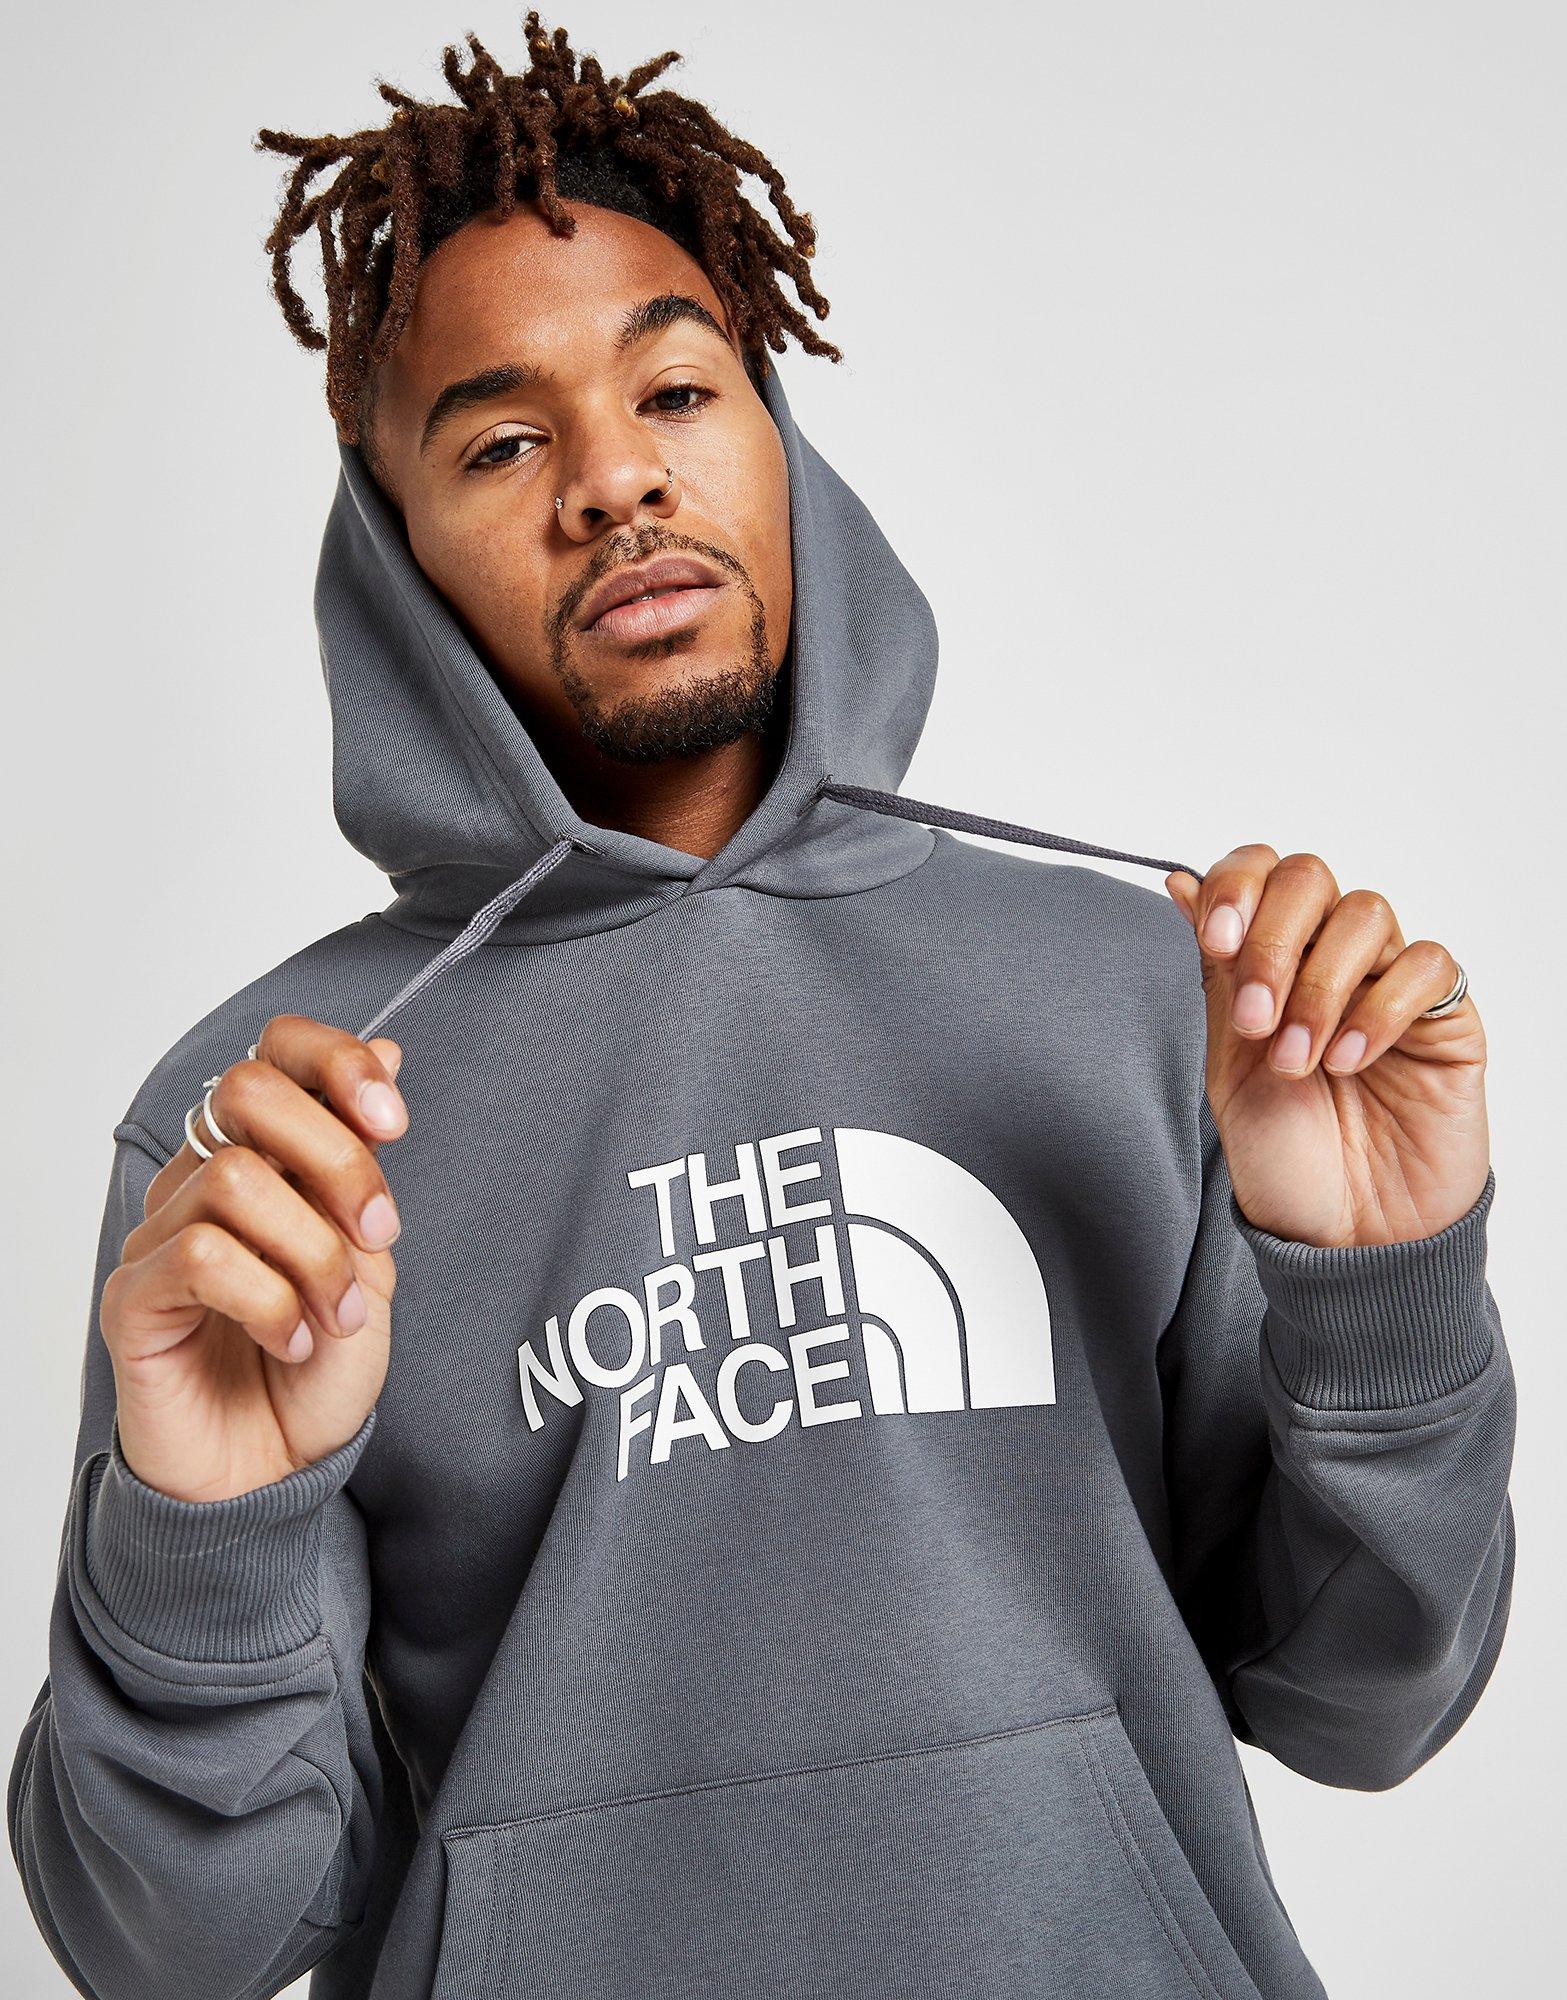 The North Face Bondi Large Logo Hoodie